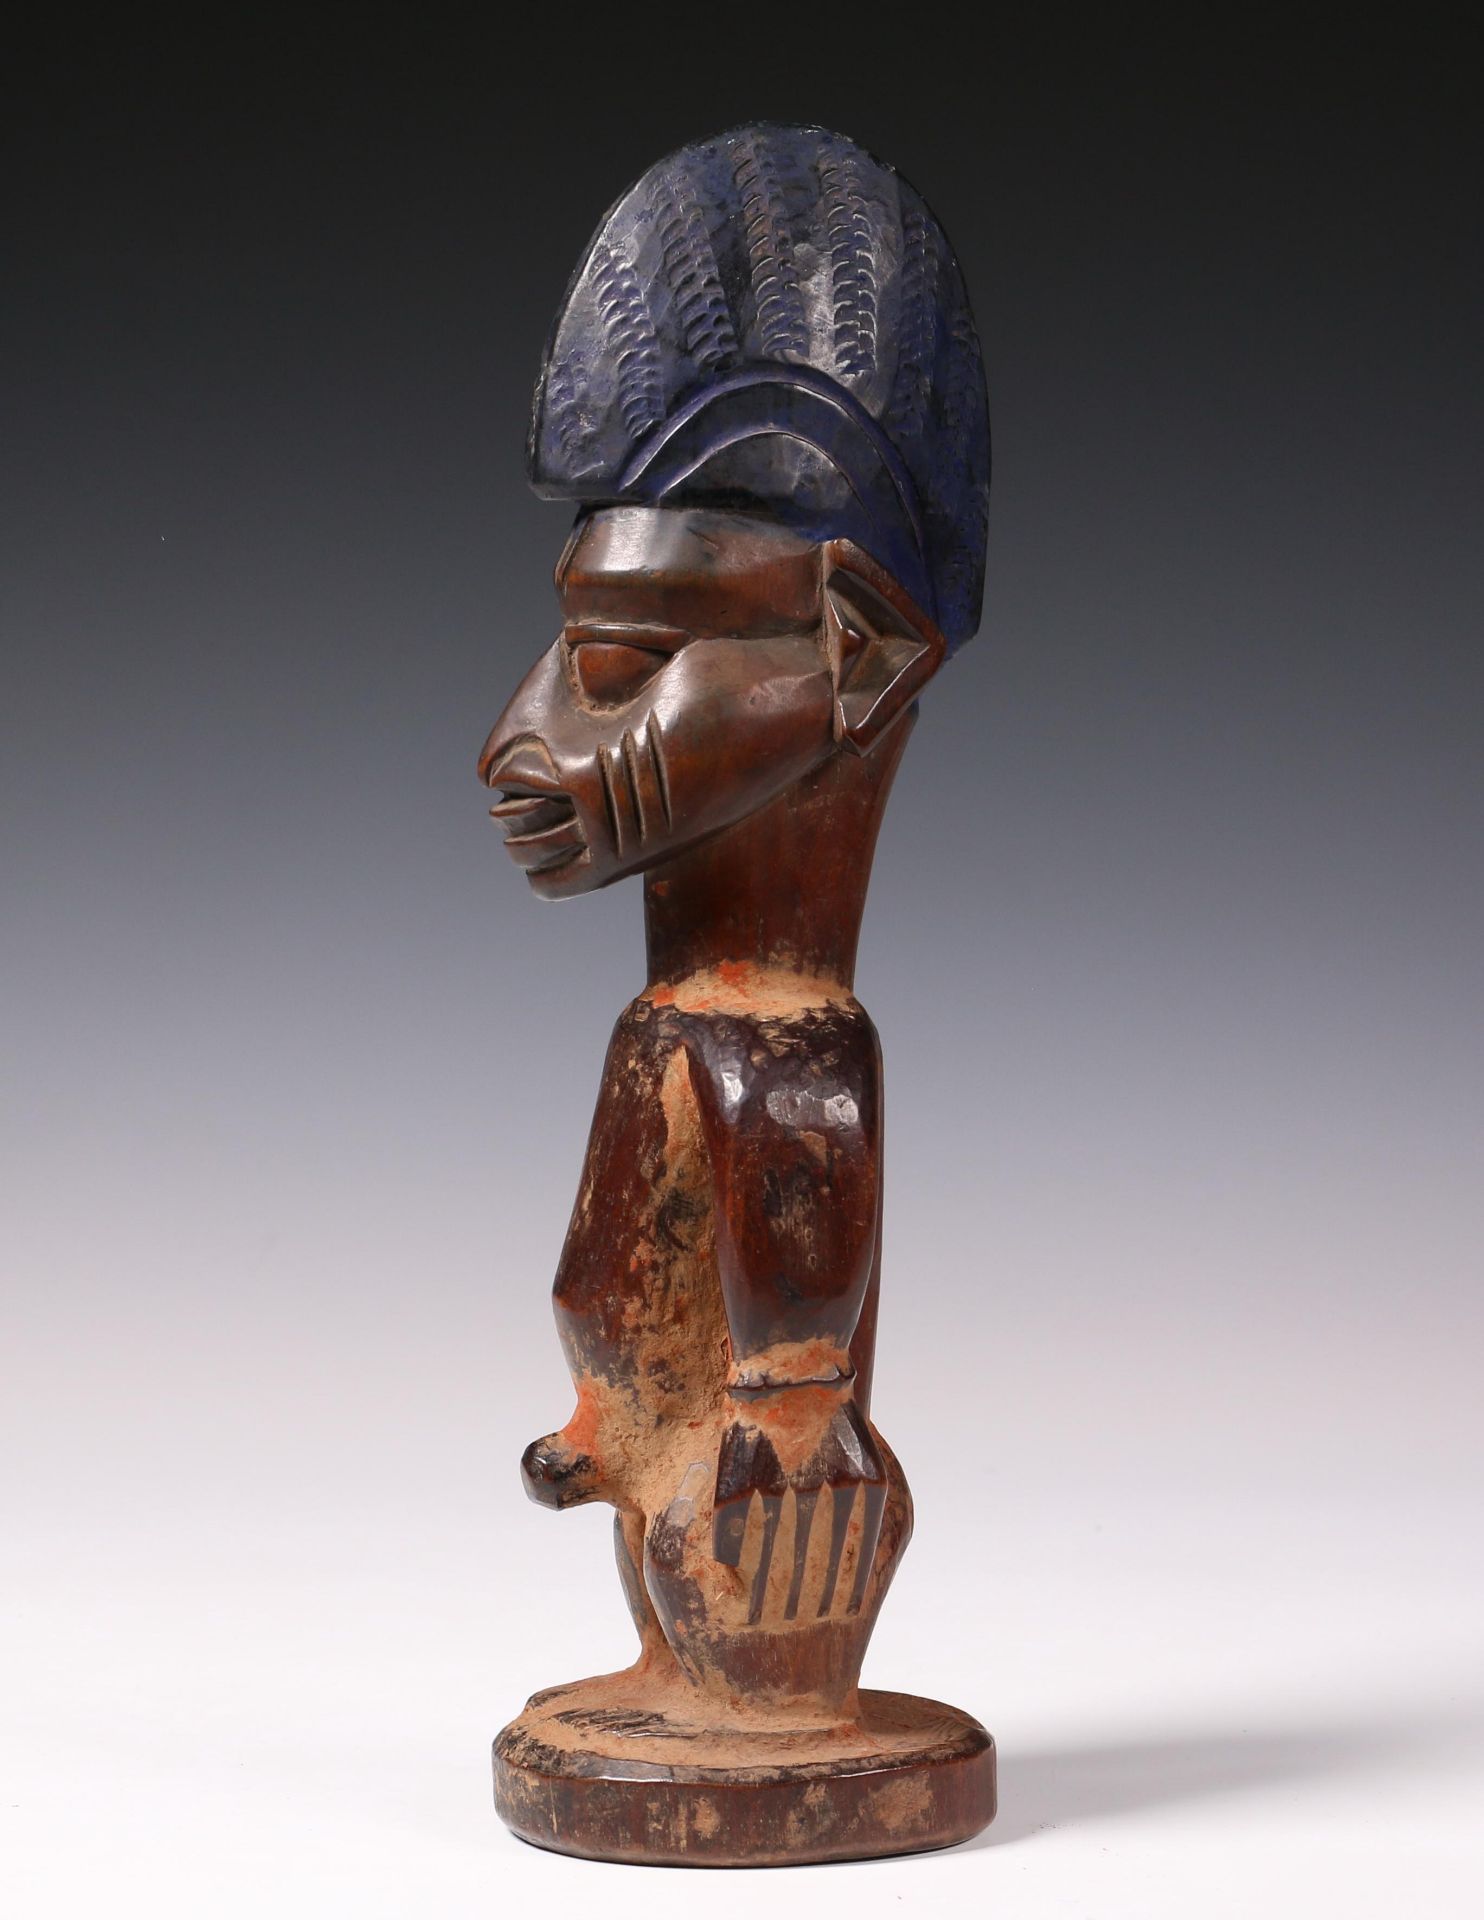 Nigeria, Yoruba, Ijebu, Ijebu-Ode, male twin figure with prominent sex